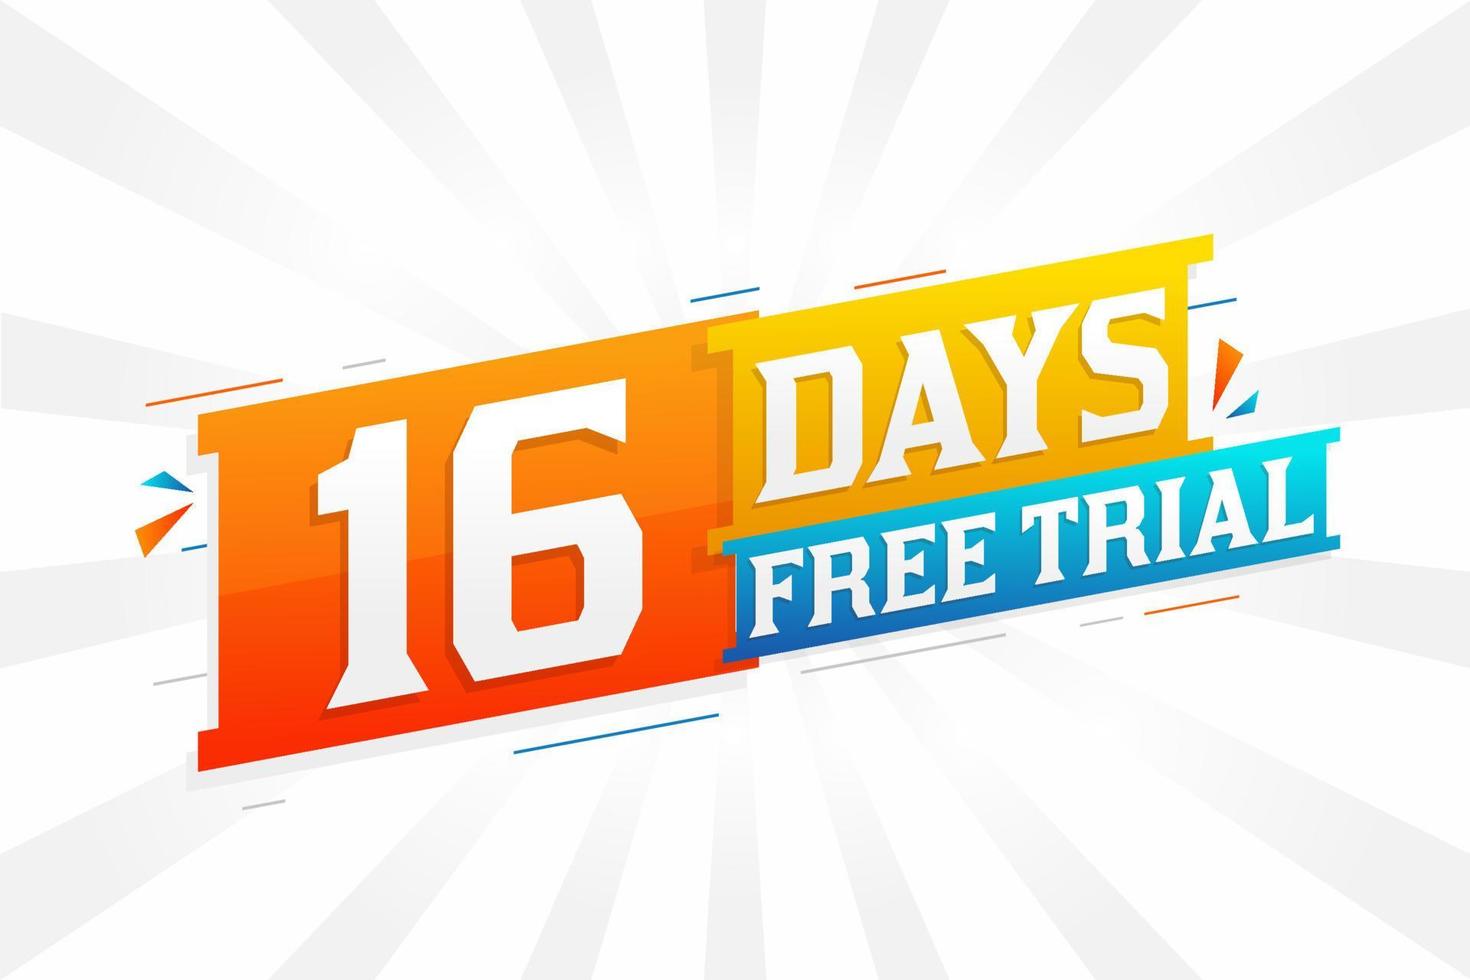 16 días de prueba gratuita vector de stock de texto en negrita promocional